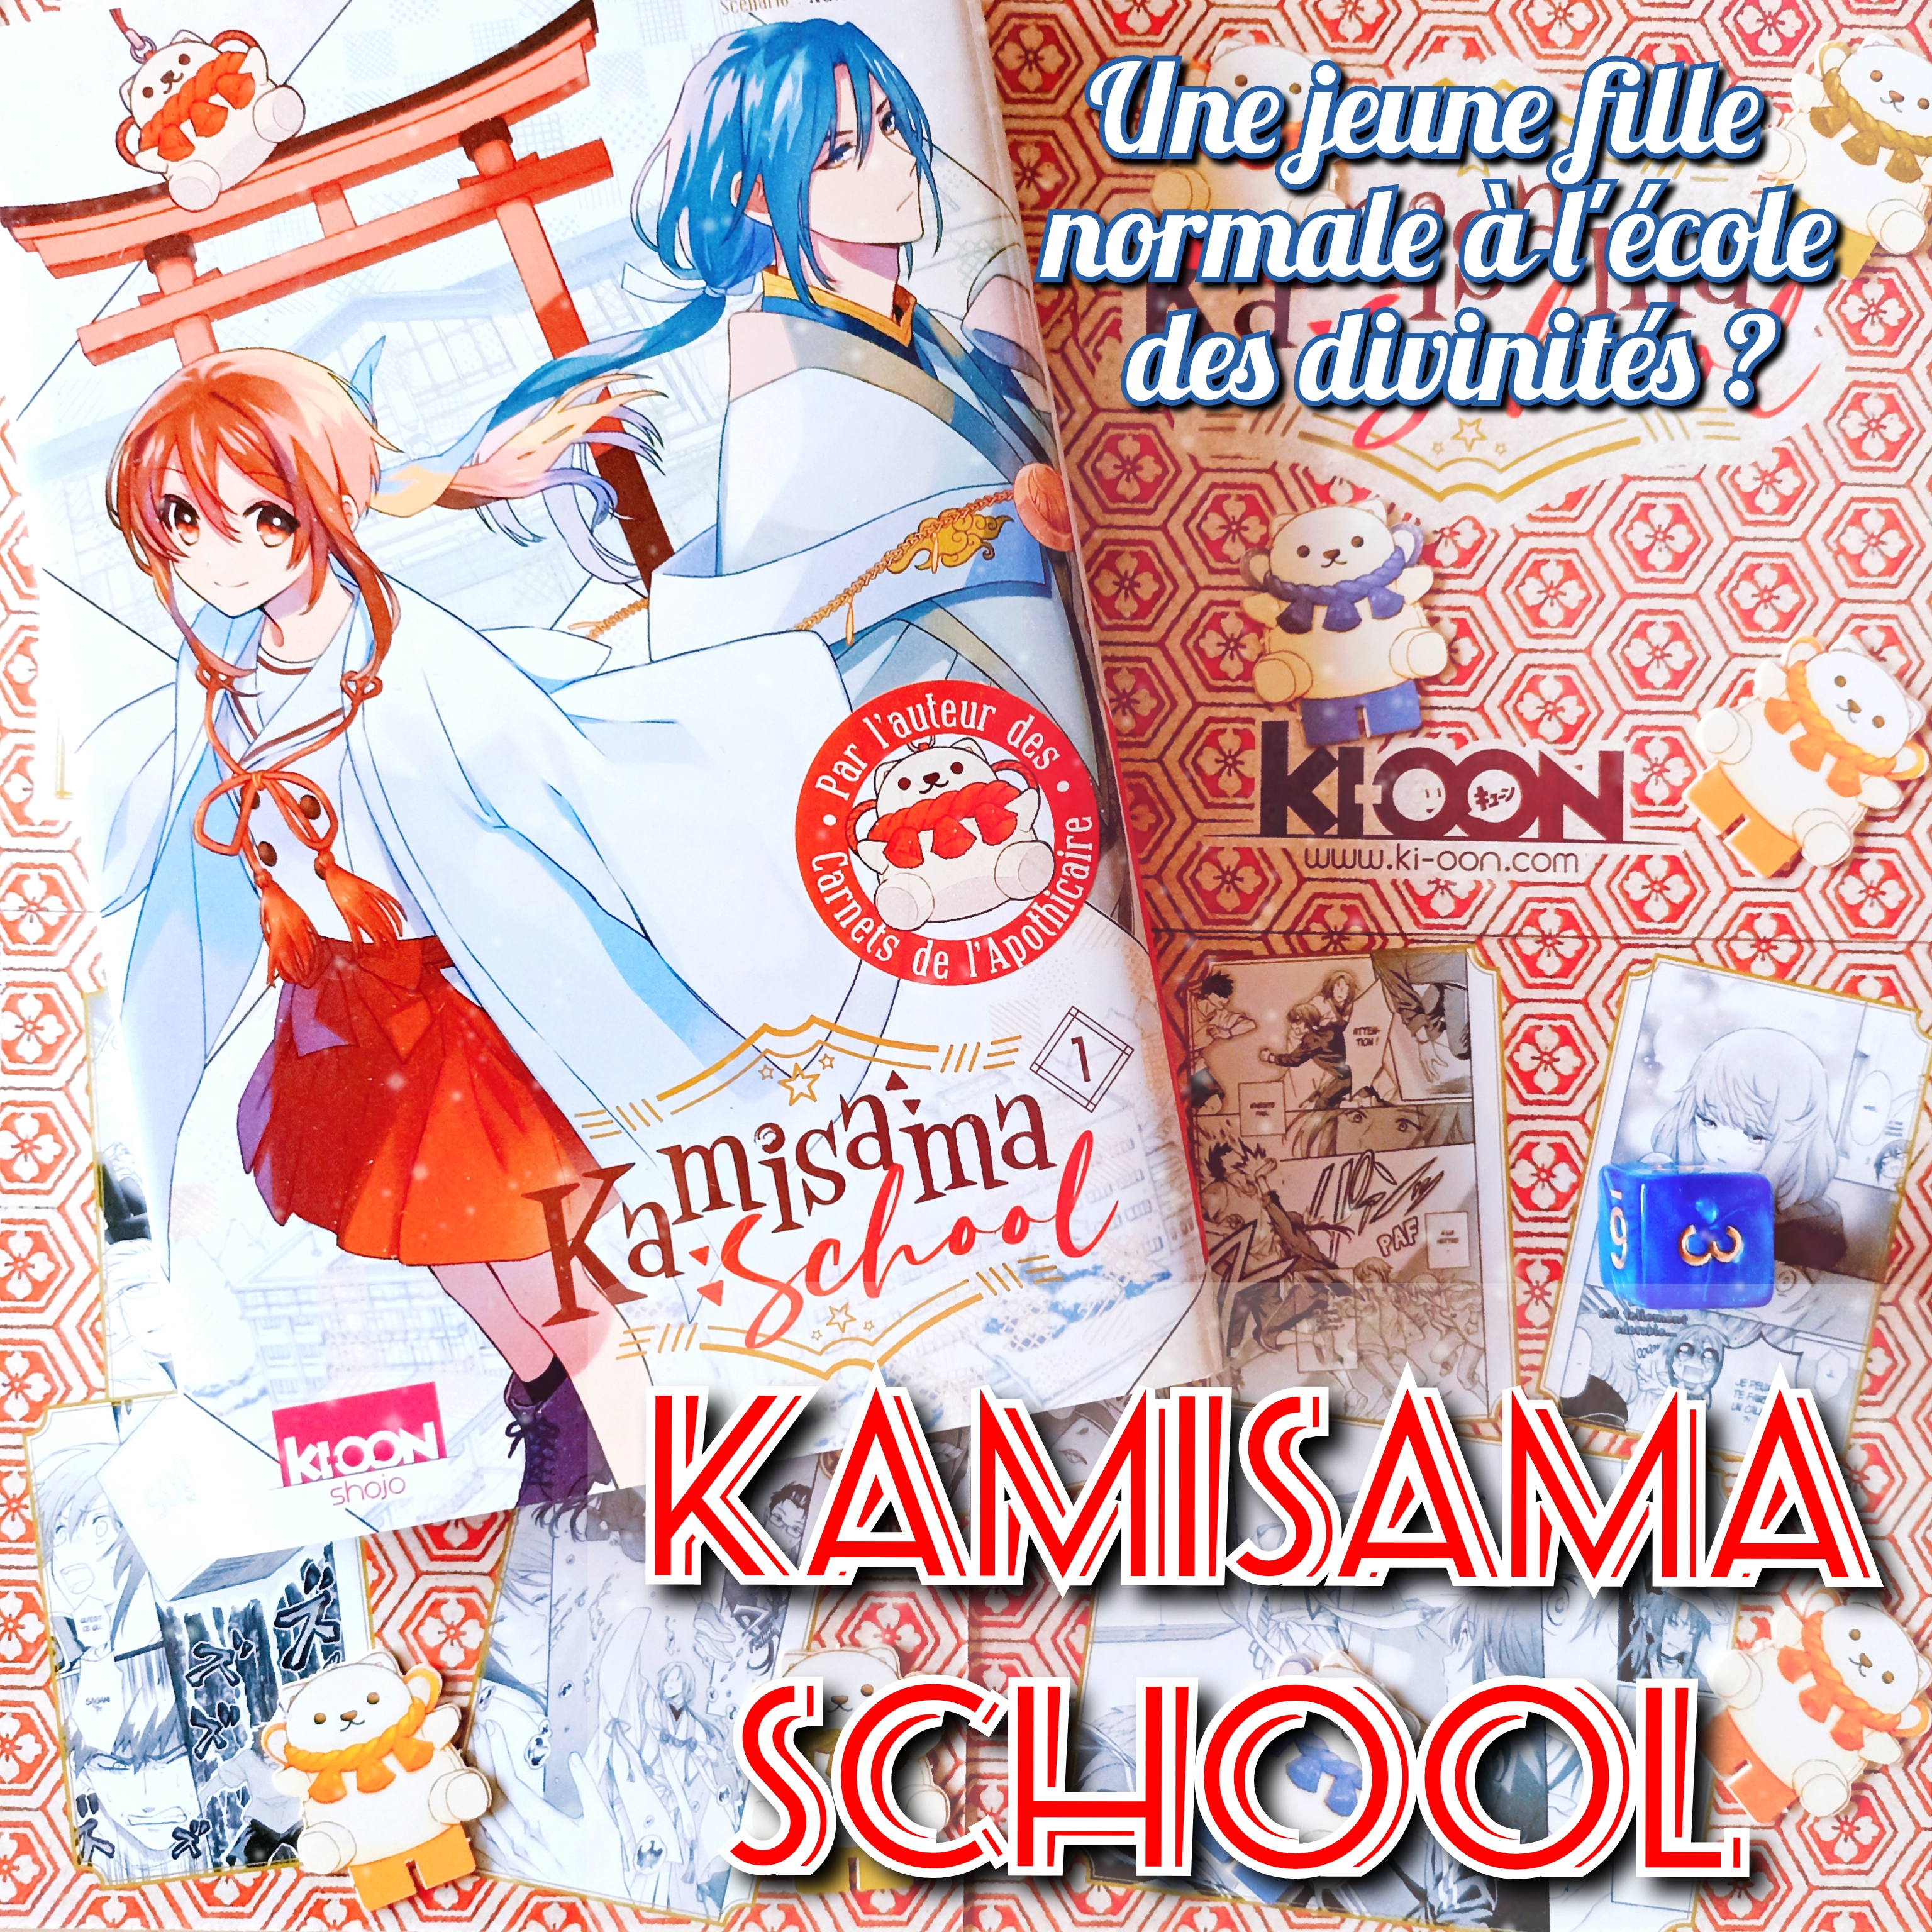 Kamisama School